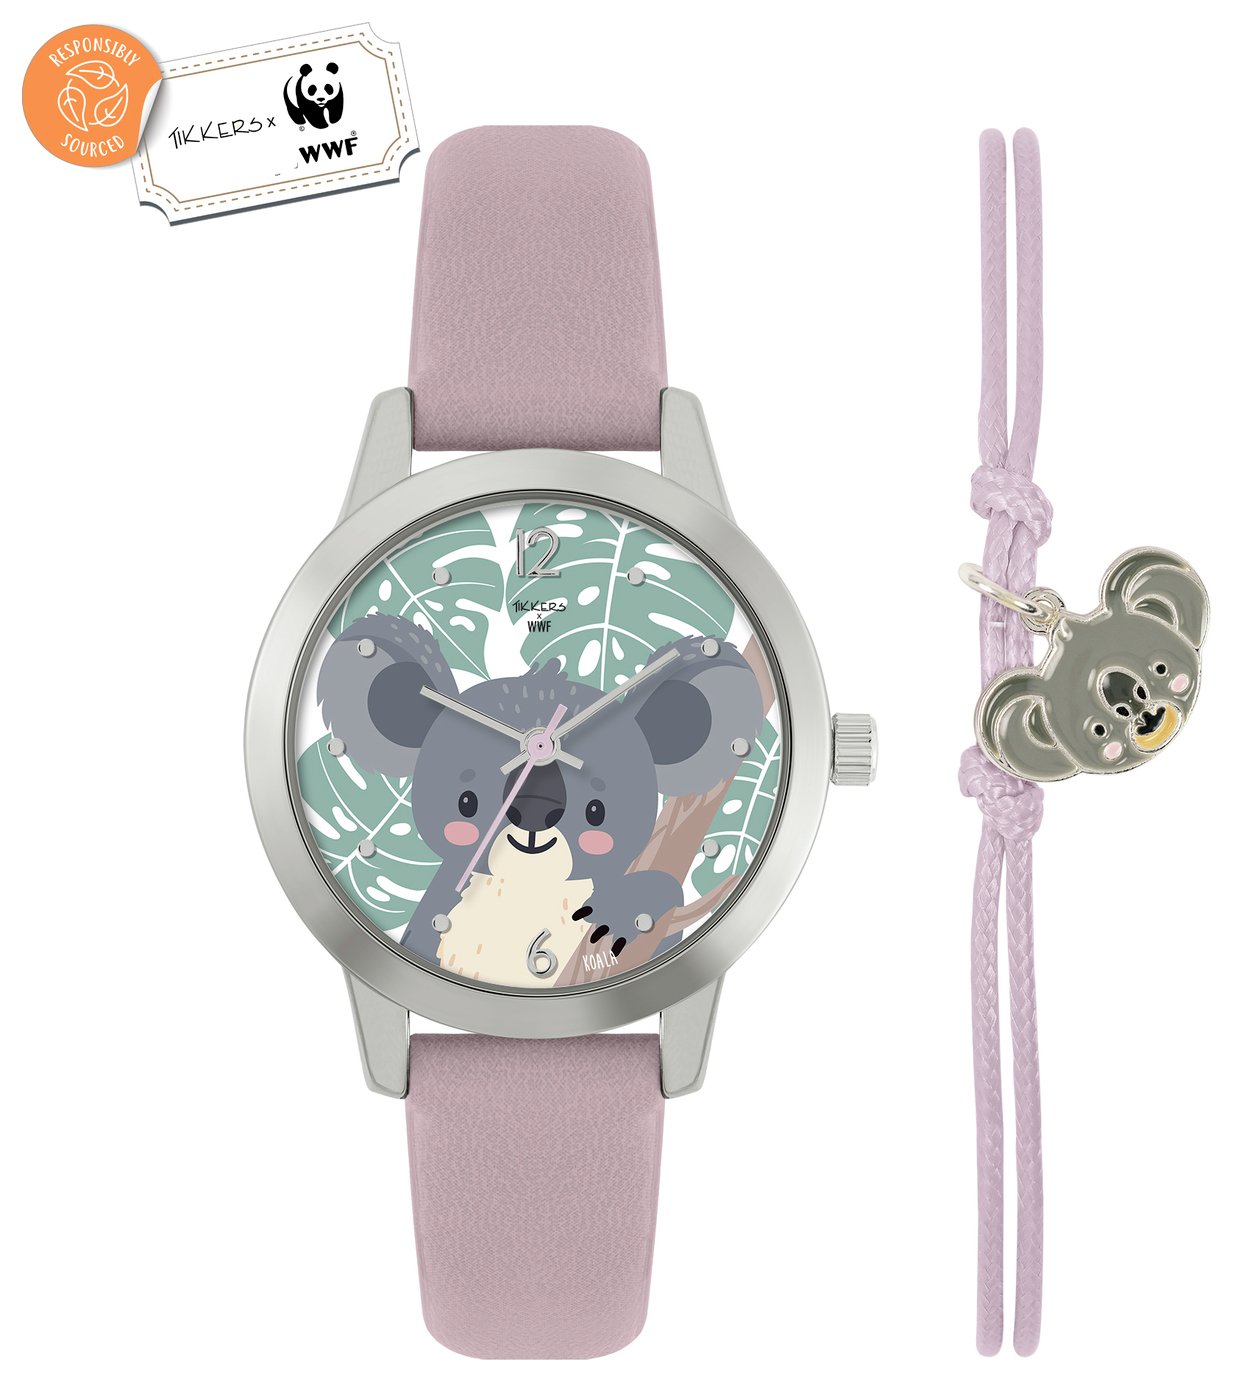 Tikkers x WWF - Koala Dial Watch and Koala Charm Bracelet 